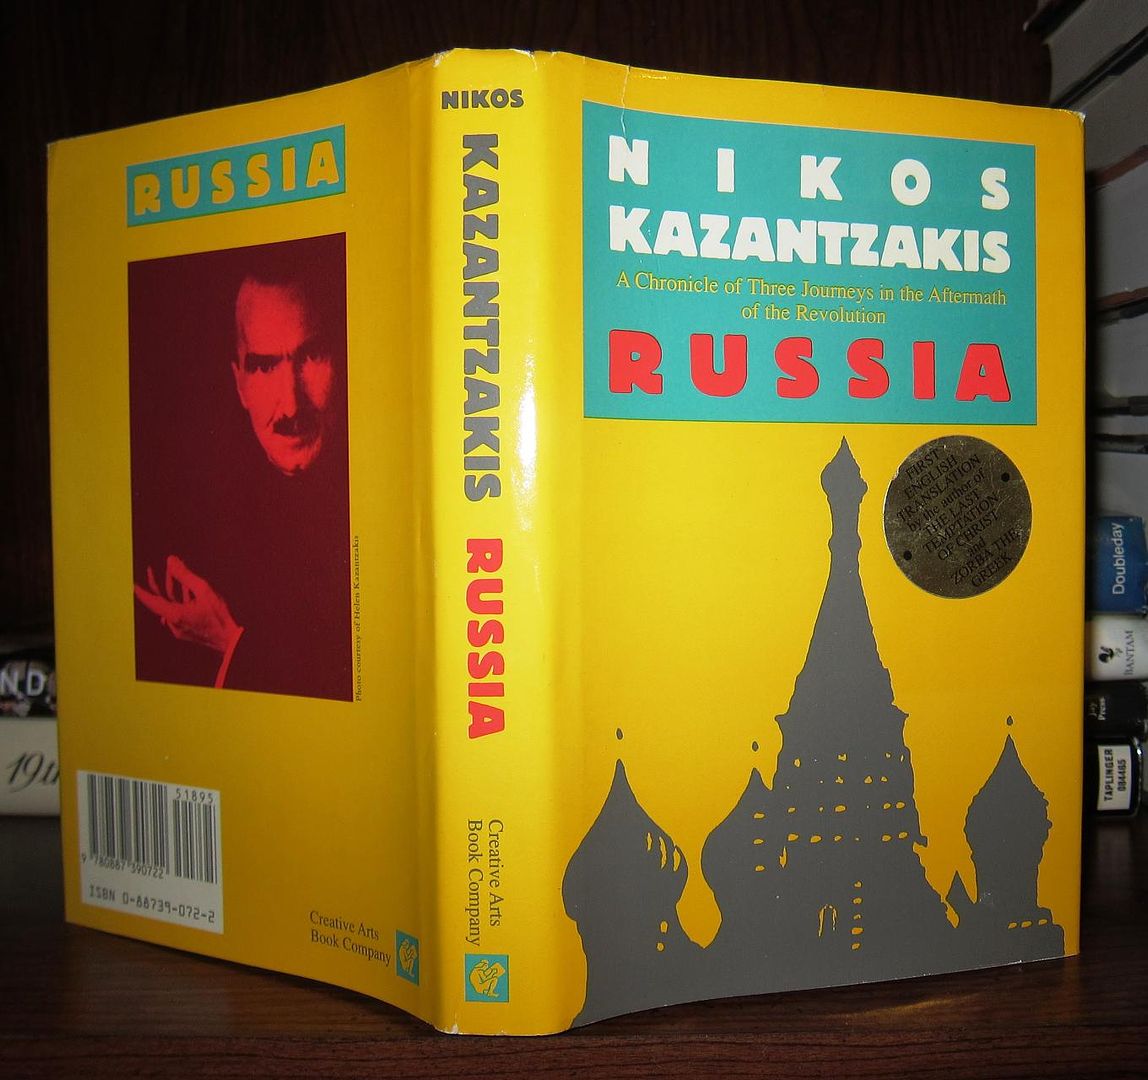 KAZANTZAKIS, NIKOS; MASKELERIS, THANASIS & MICHAEL ANTONAKES - Russia a Chronicle of Three Journeys in the Aftermath of the Revolution